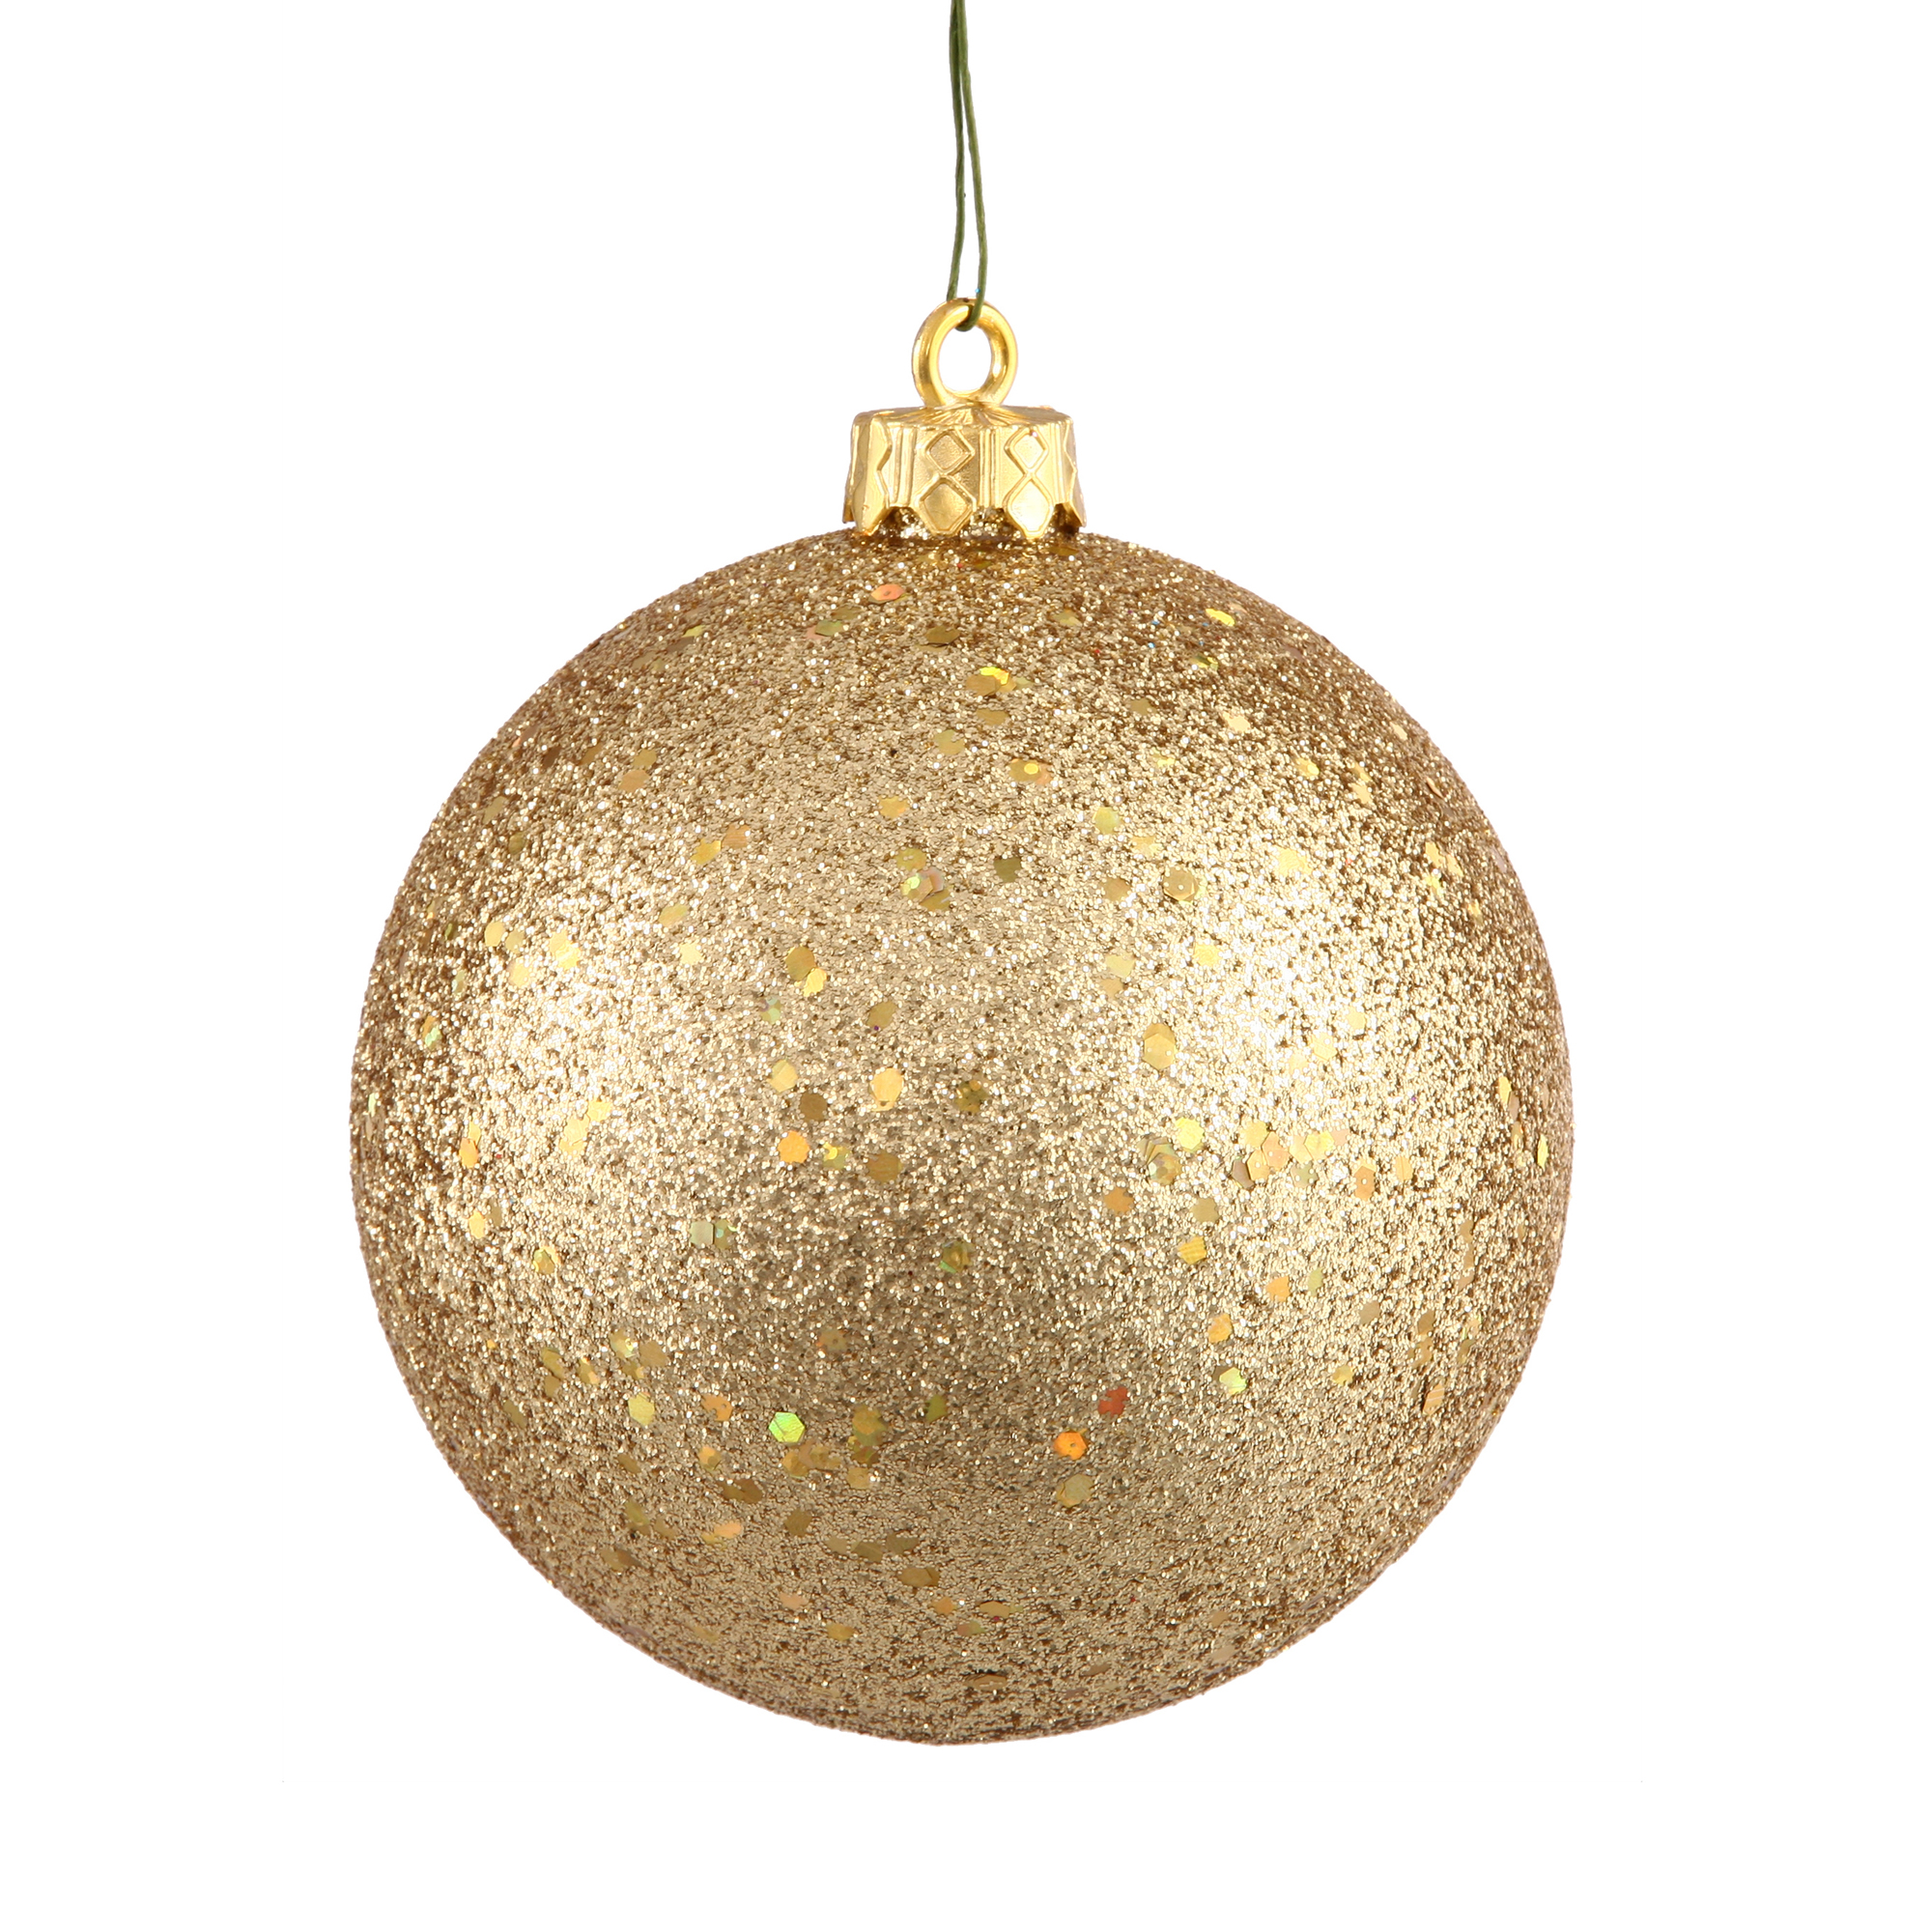 Vickerman 10" Gold Sequin Ball Ornament - image 1 of 2